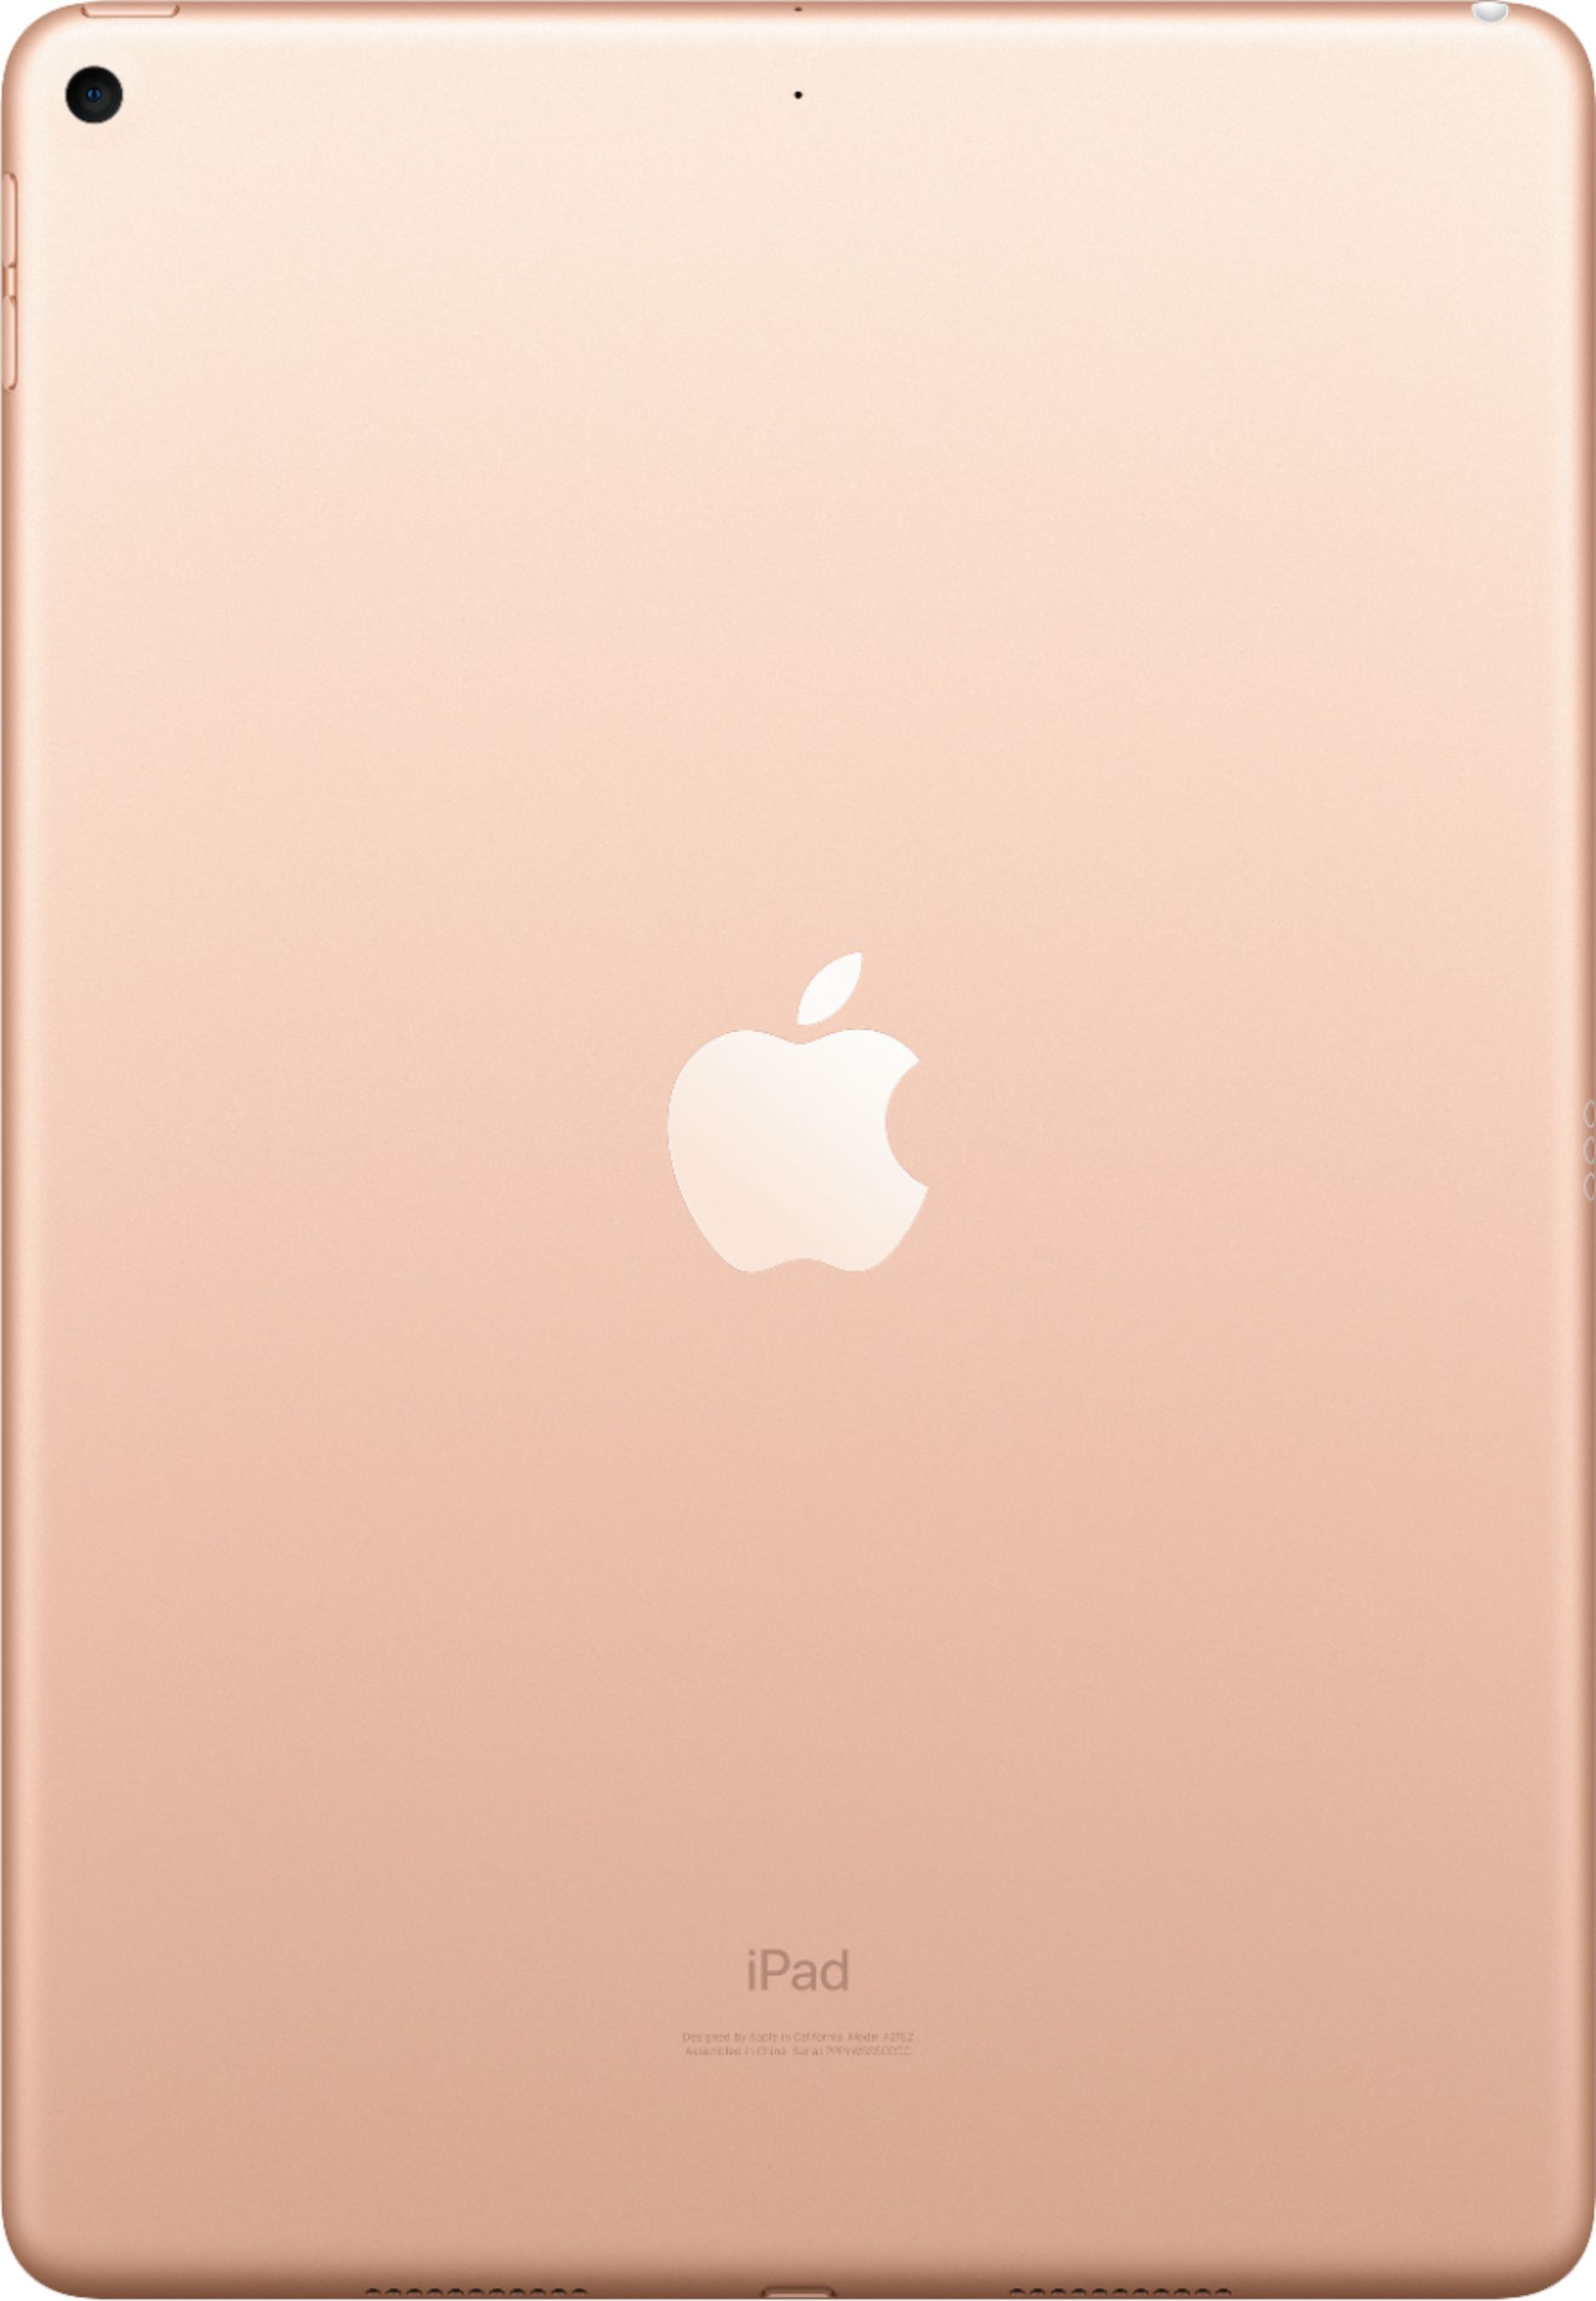 Back View: Apple - MacBook 12" Retina Display - Intel Core i5 - 8GB Memory - 512GB Flash Storage - Gold